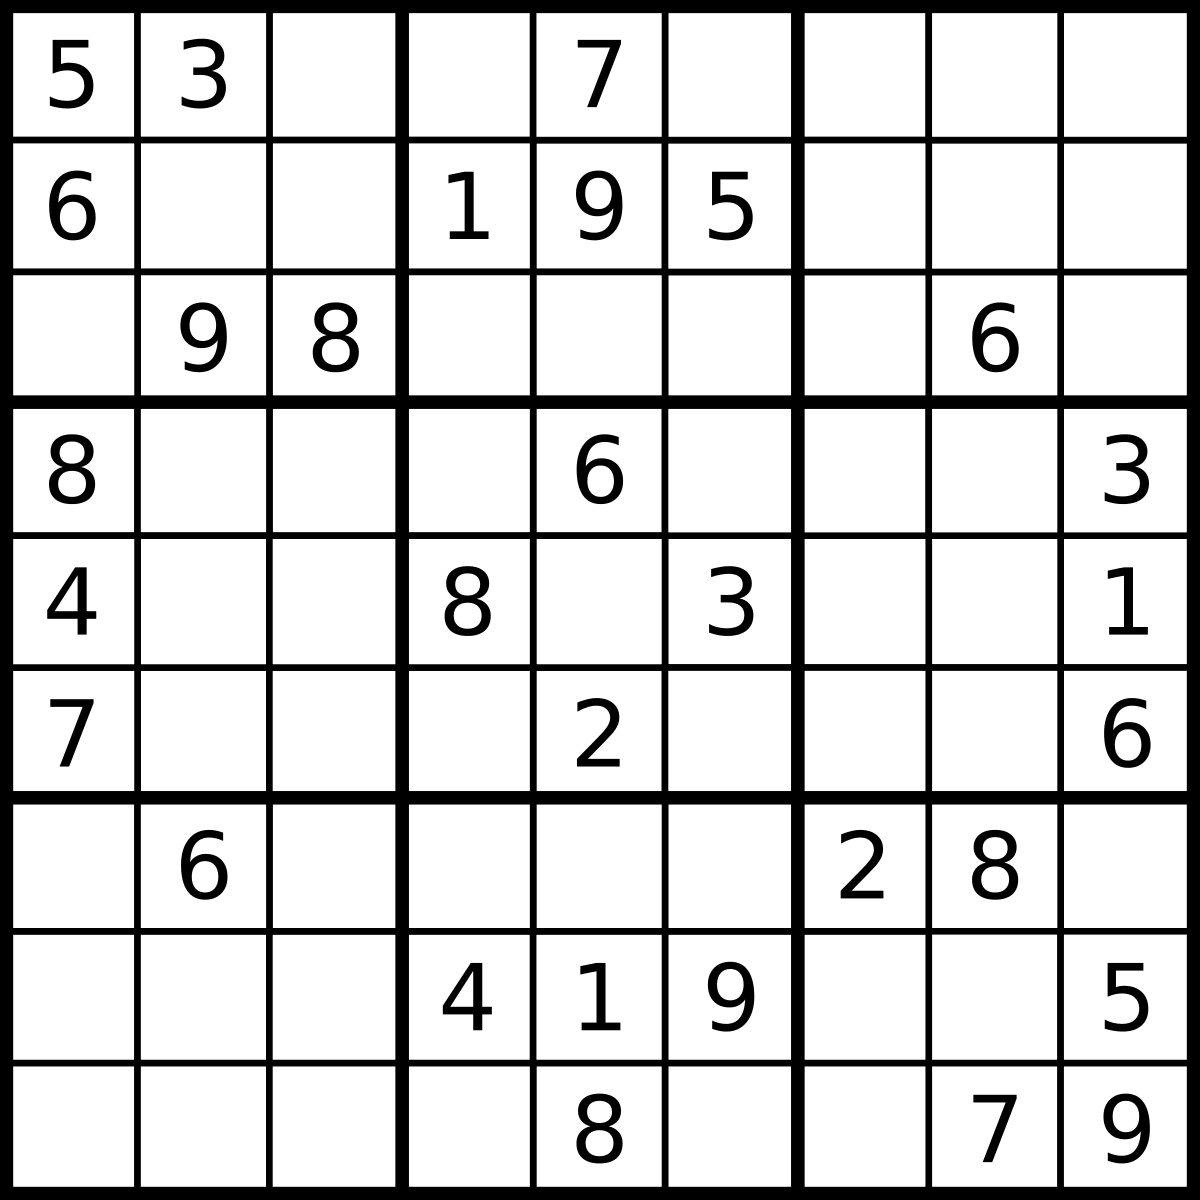 Generating & Solving Sudoku Puzzles | by Daniel Sasse | Medium